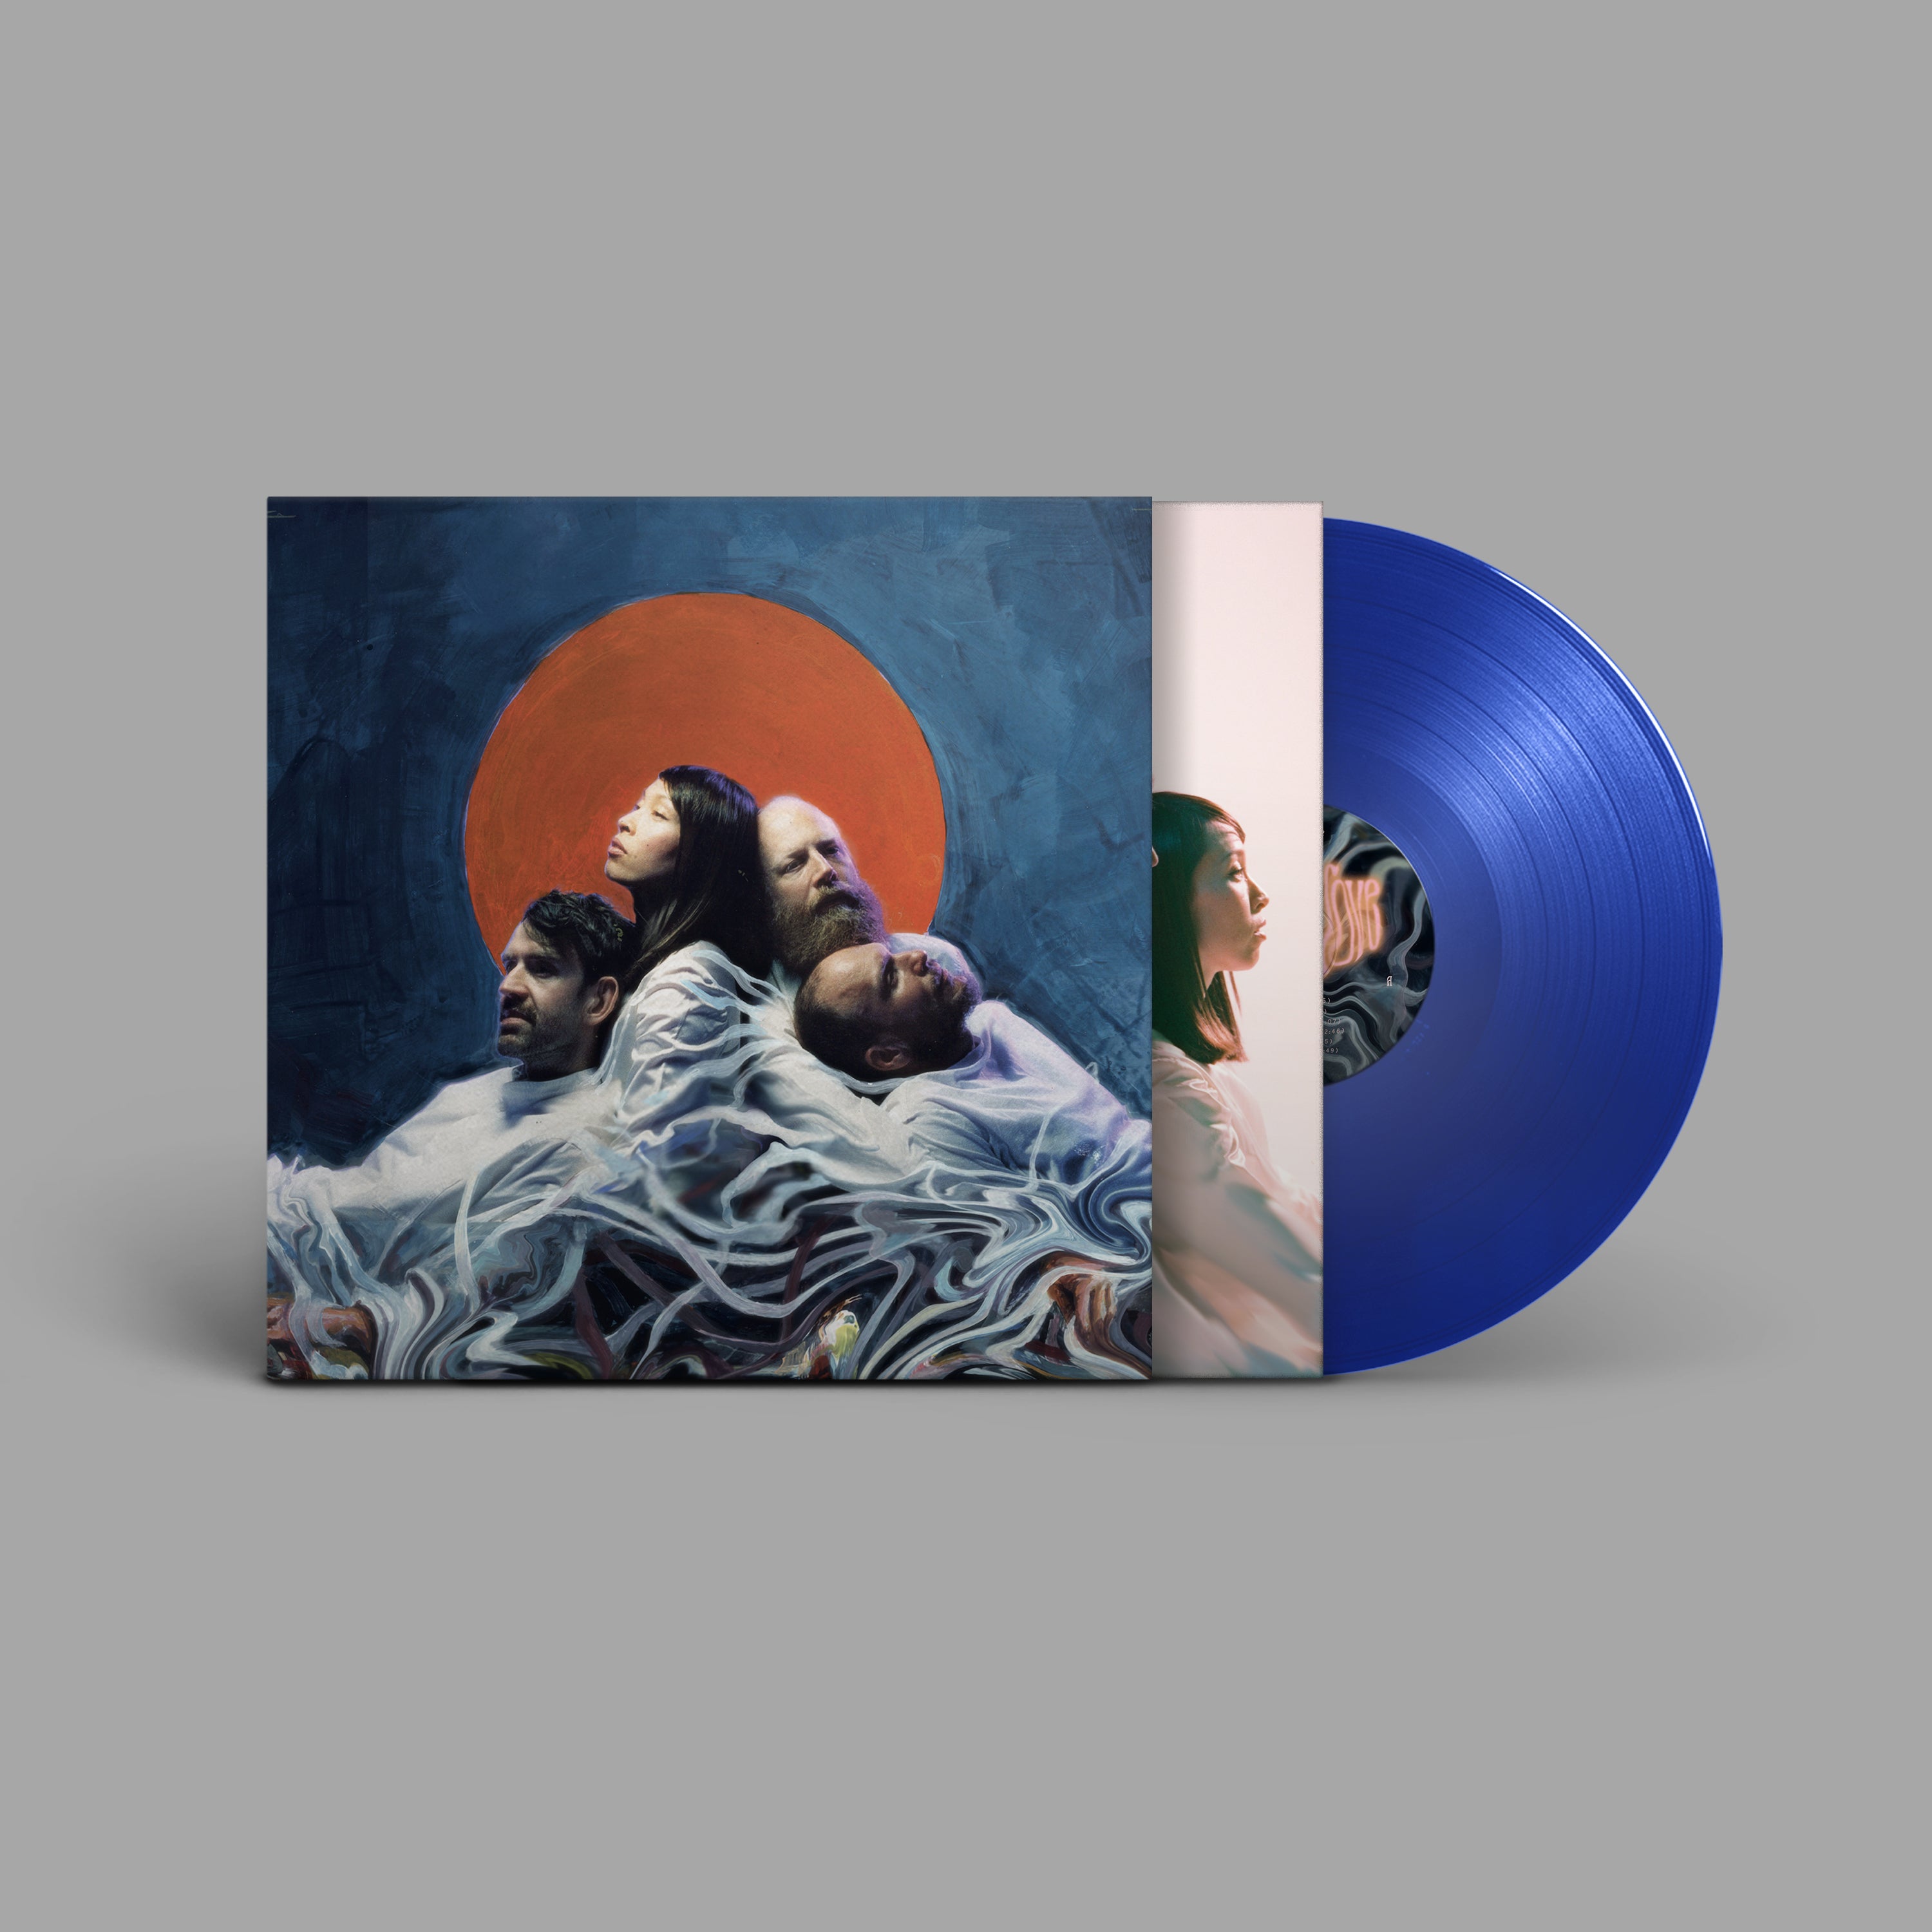 Slugs Of Love: Limited Translucent Blue Vinyl LP